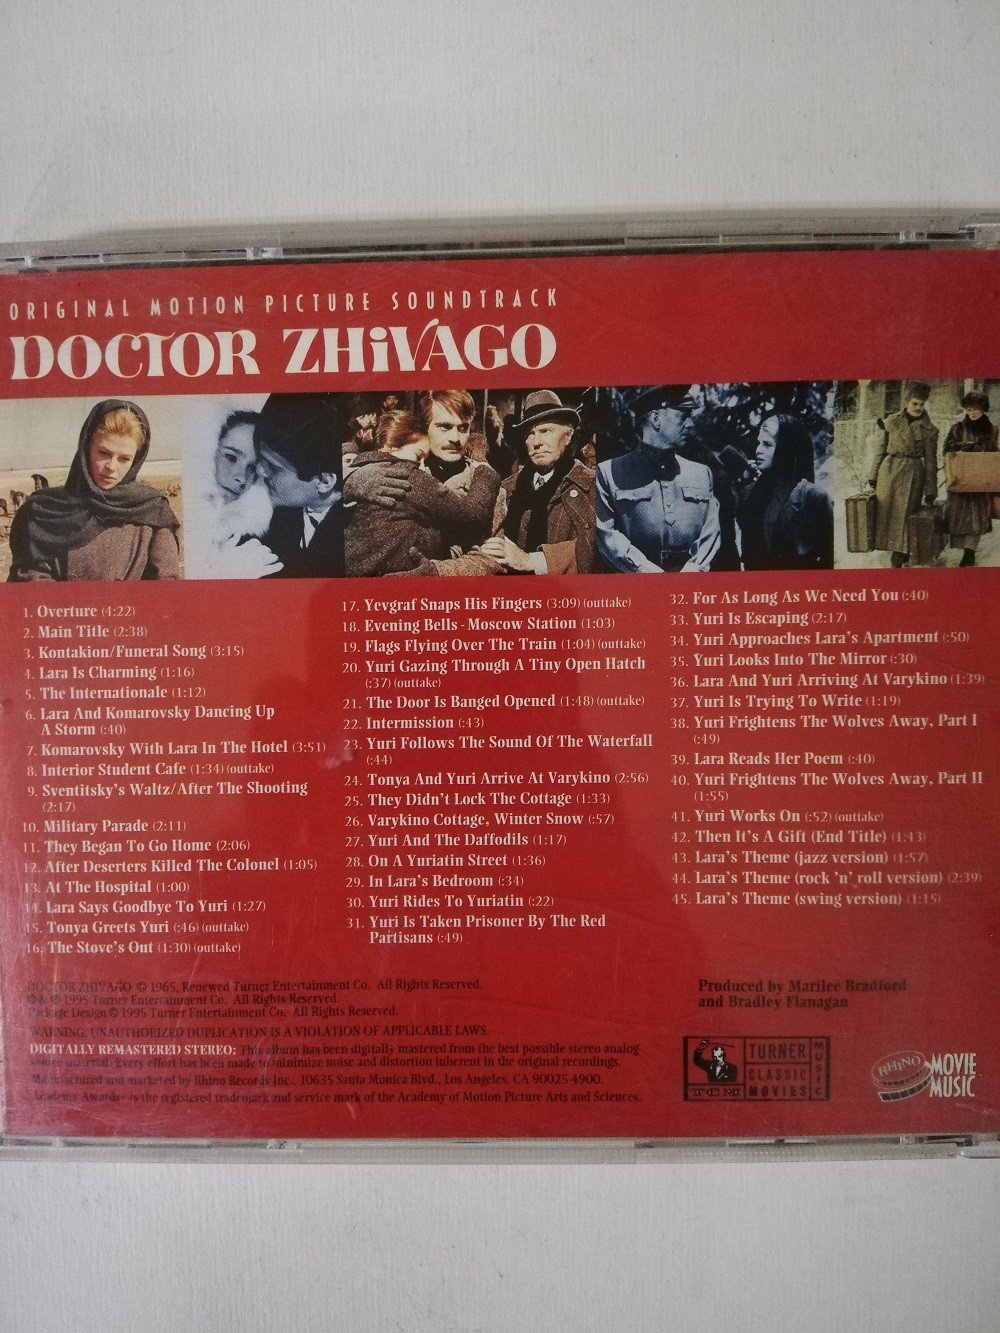 Imagen CD DOCTOR ZHIVAGO - ORIGINAL MOTION PICTURE SOUNDTRACK 2